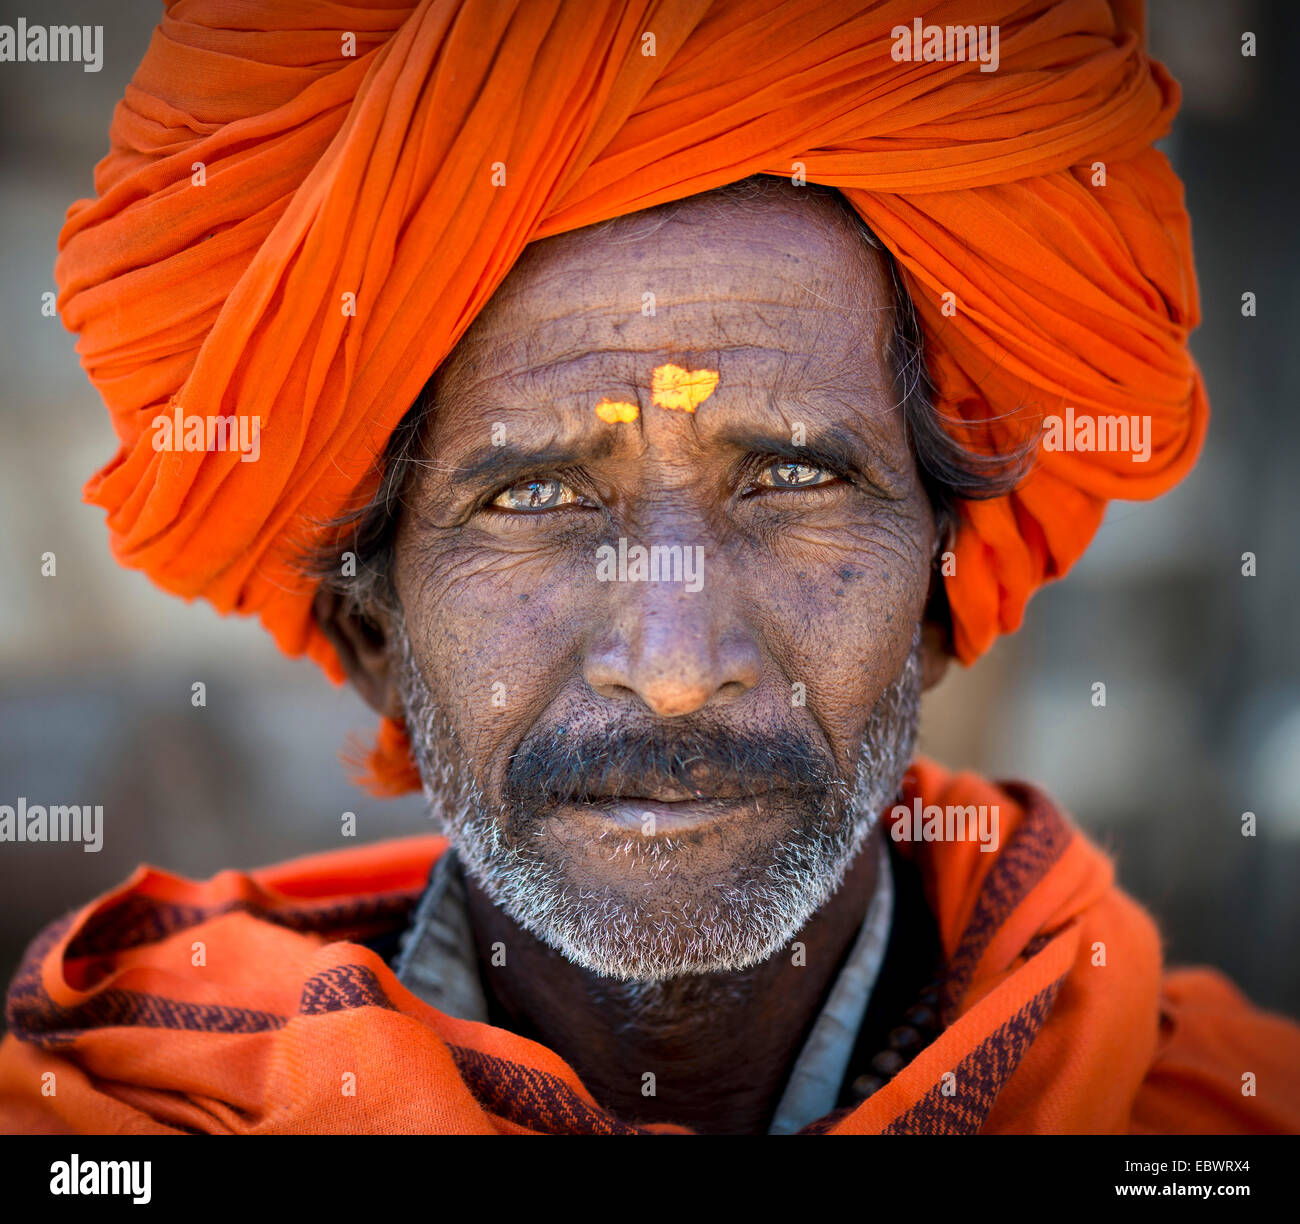 Man with and orange turban and yellow bindi on his forehead, portrait, Chittorgarh Fort, Chittorgarh, Rajasthan, India Stock Photo